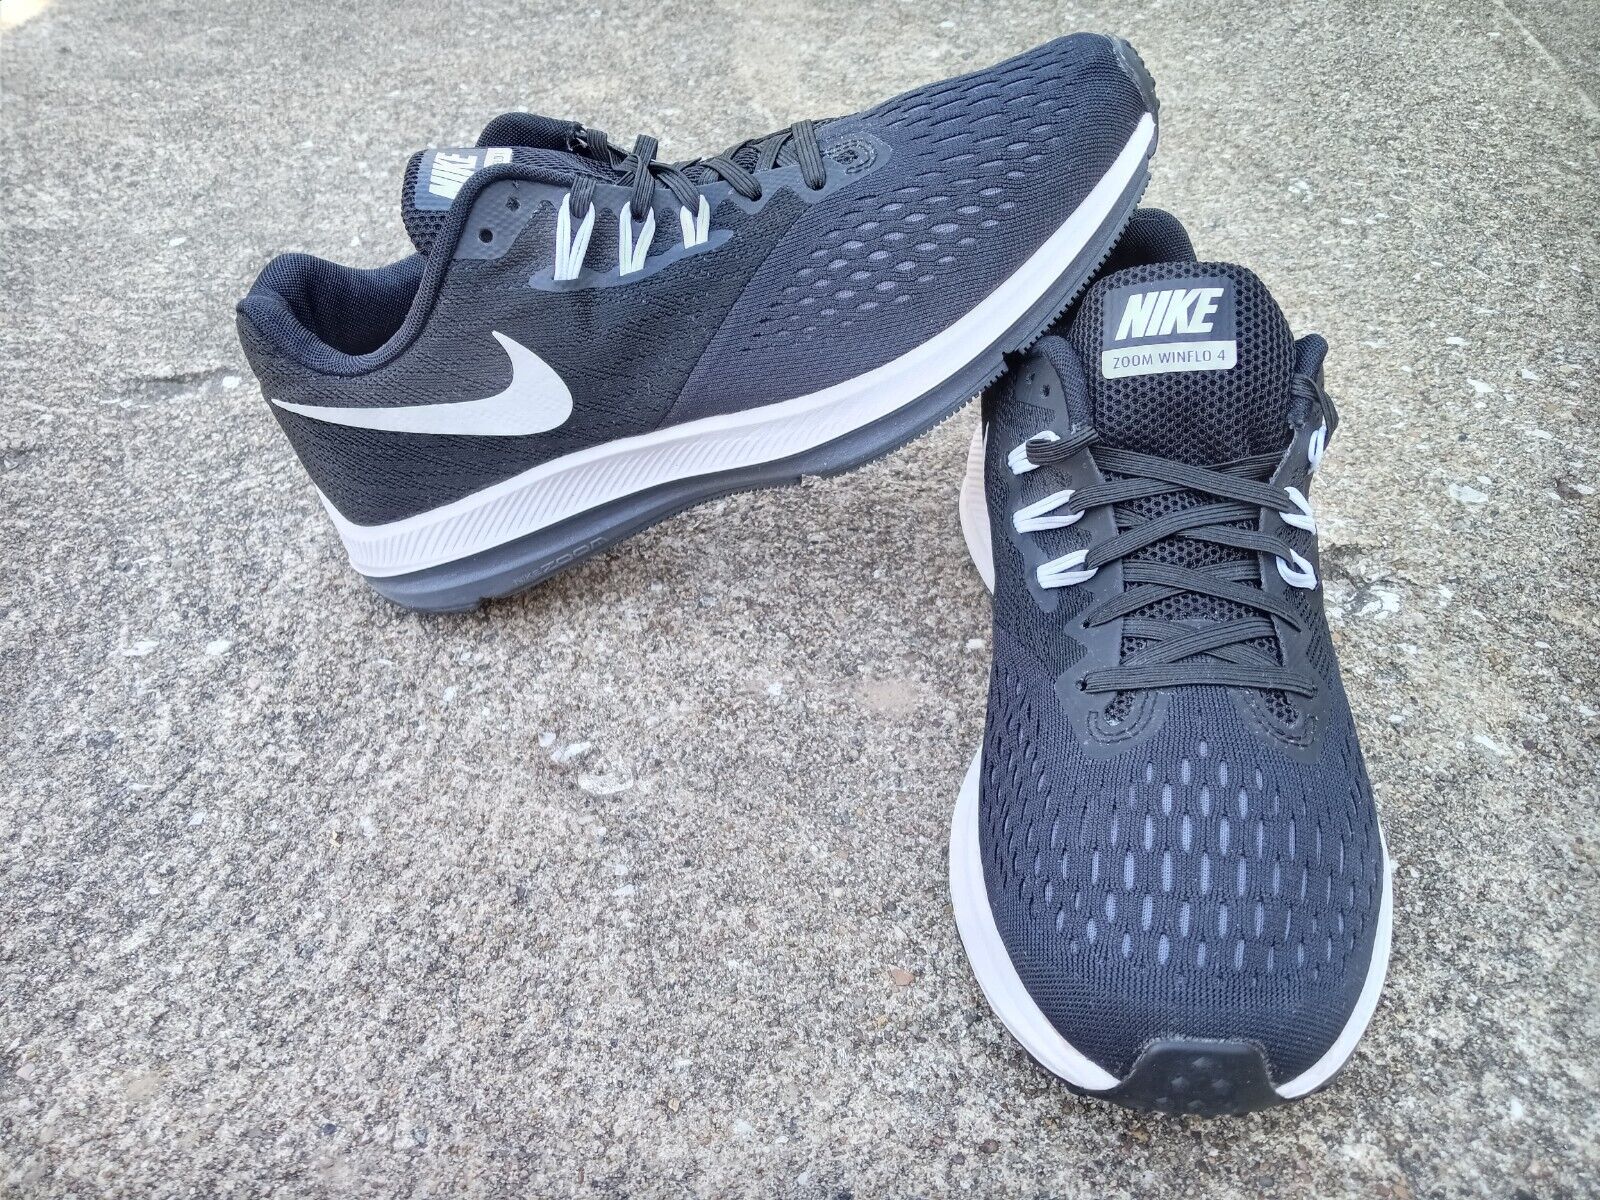 Nike Zoom Winflo 4 Running Shoes 898485-001 Size 9.5 | eBay